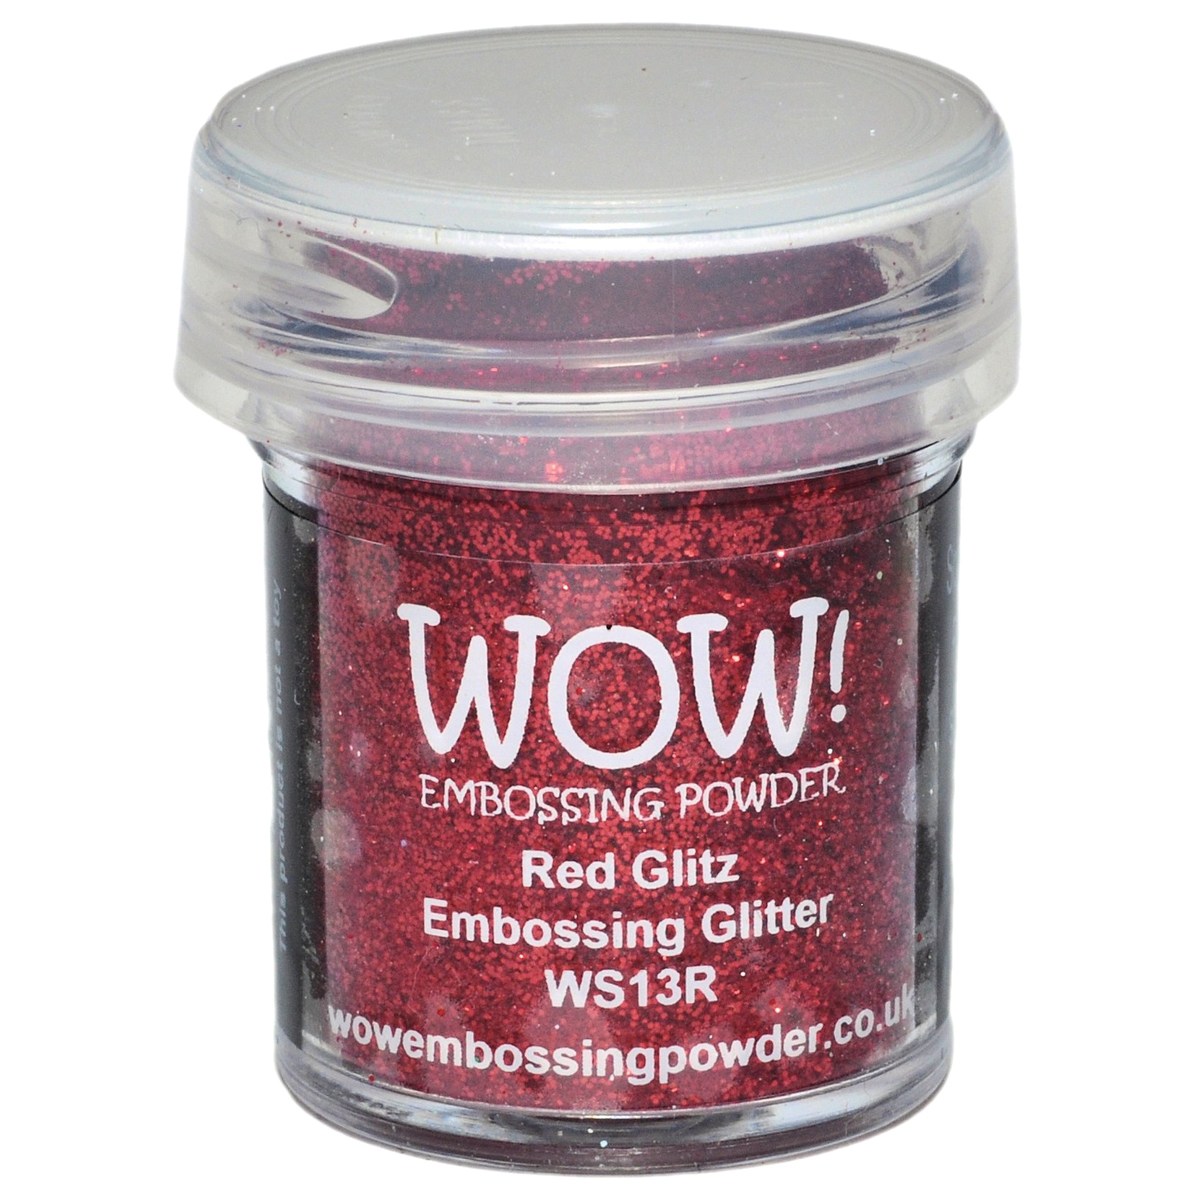 WOW! Embossing Powder 15ml-Red Glitz - image 2 of 2